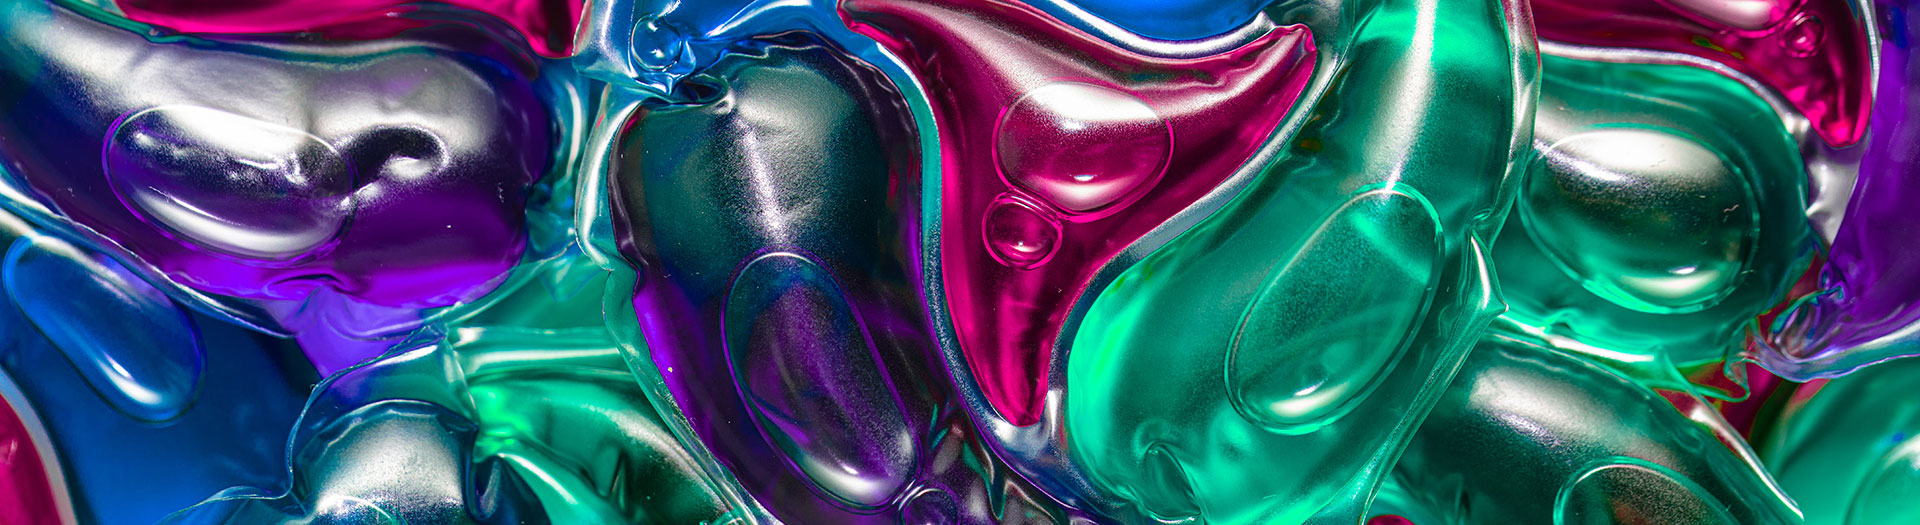 Colourful washing liquid capsules